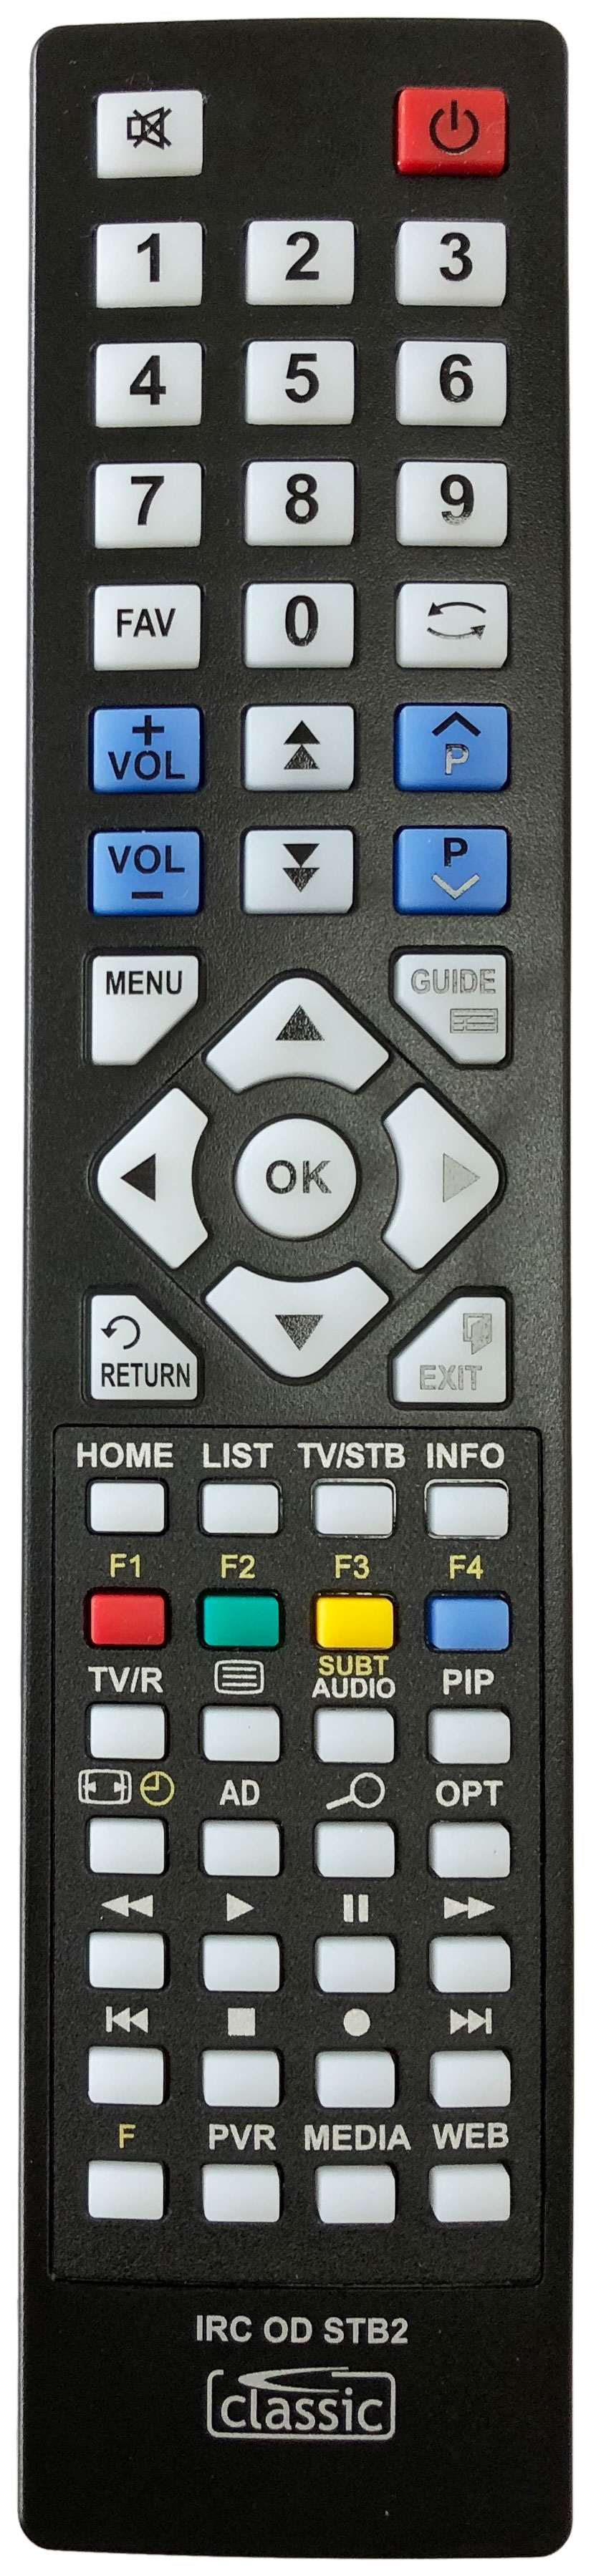 Daewoo DSD-9503T Remote Control